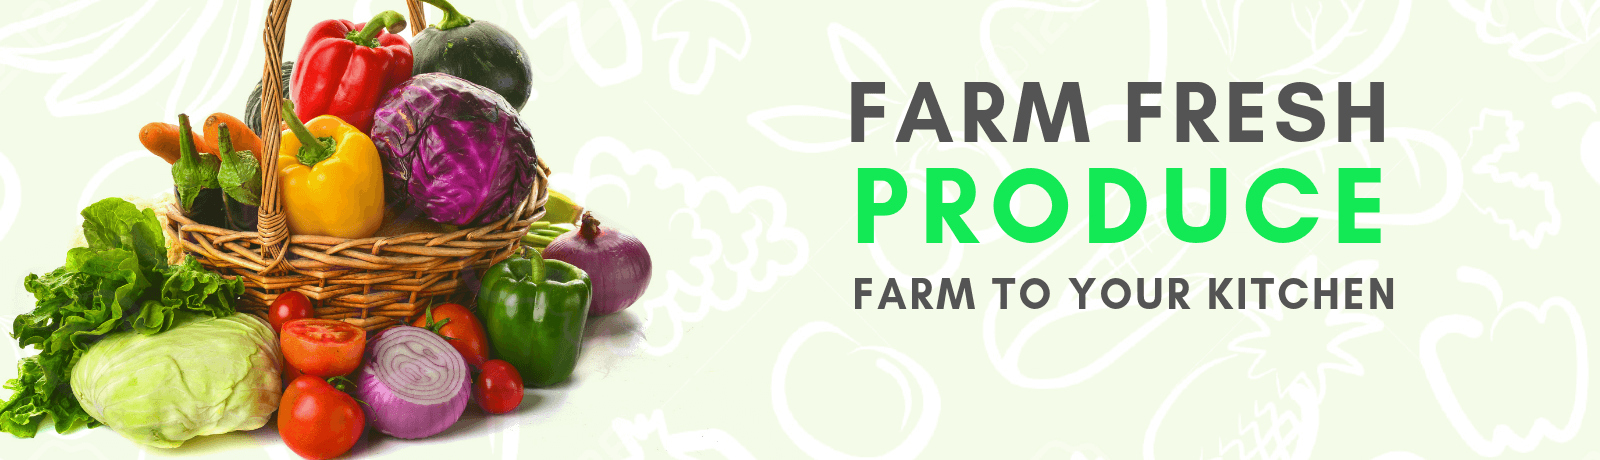 farmfresh produce